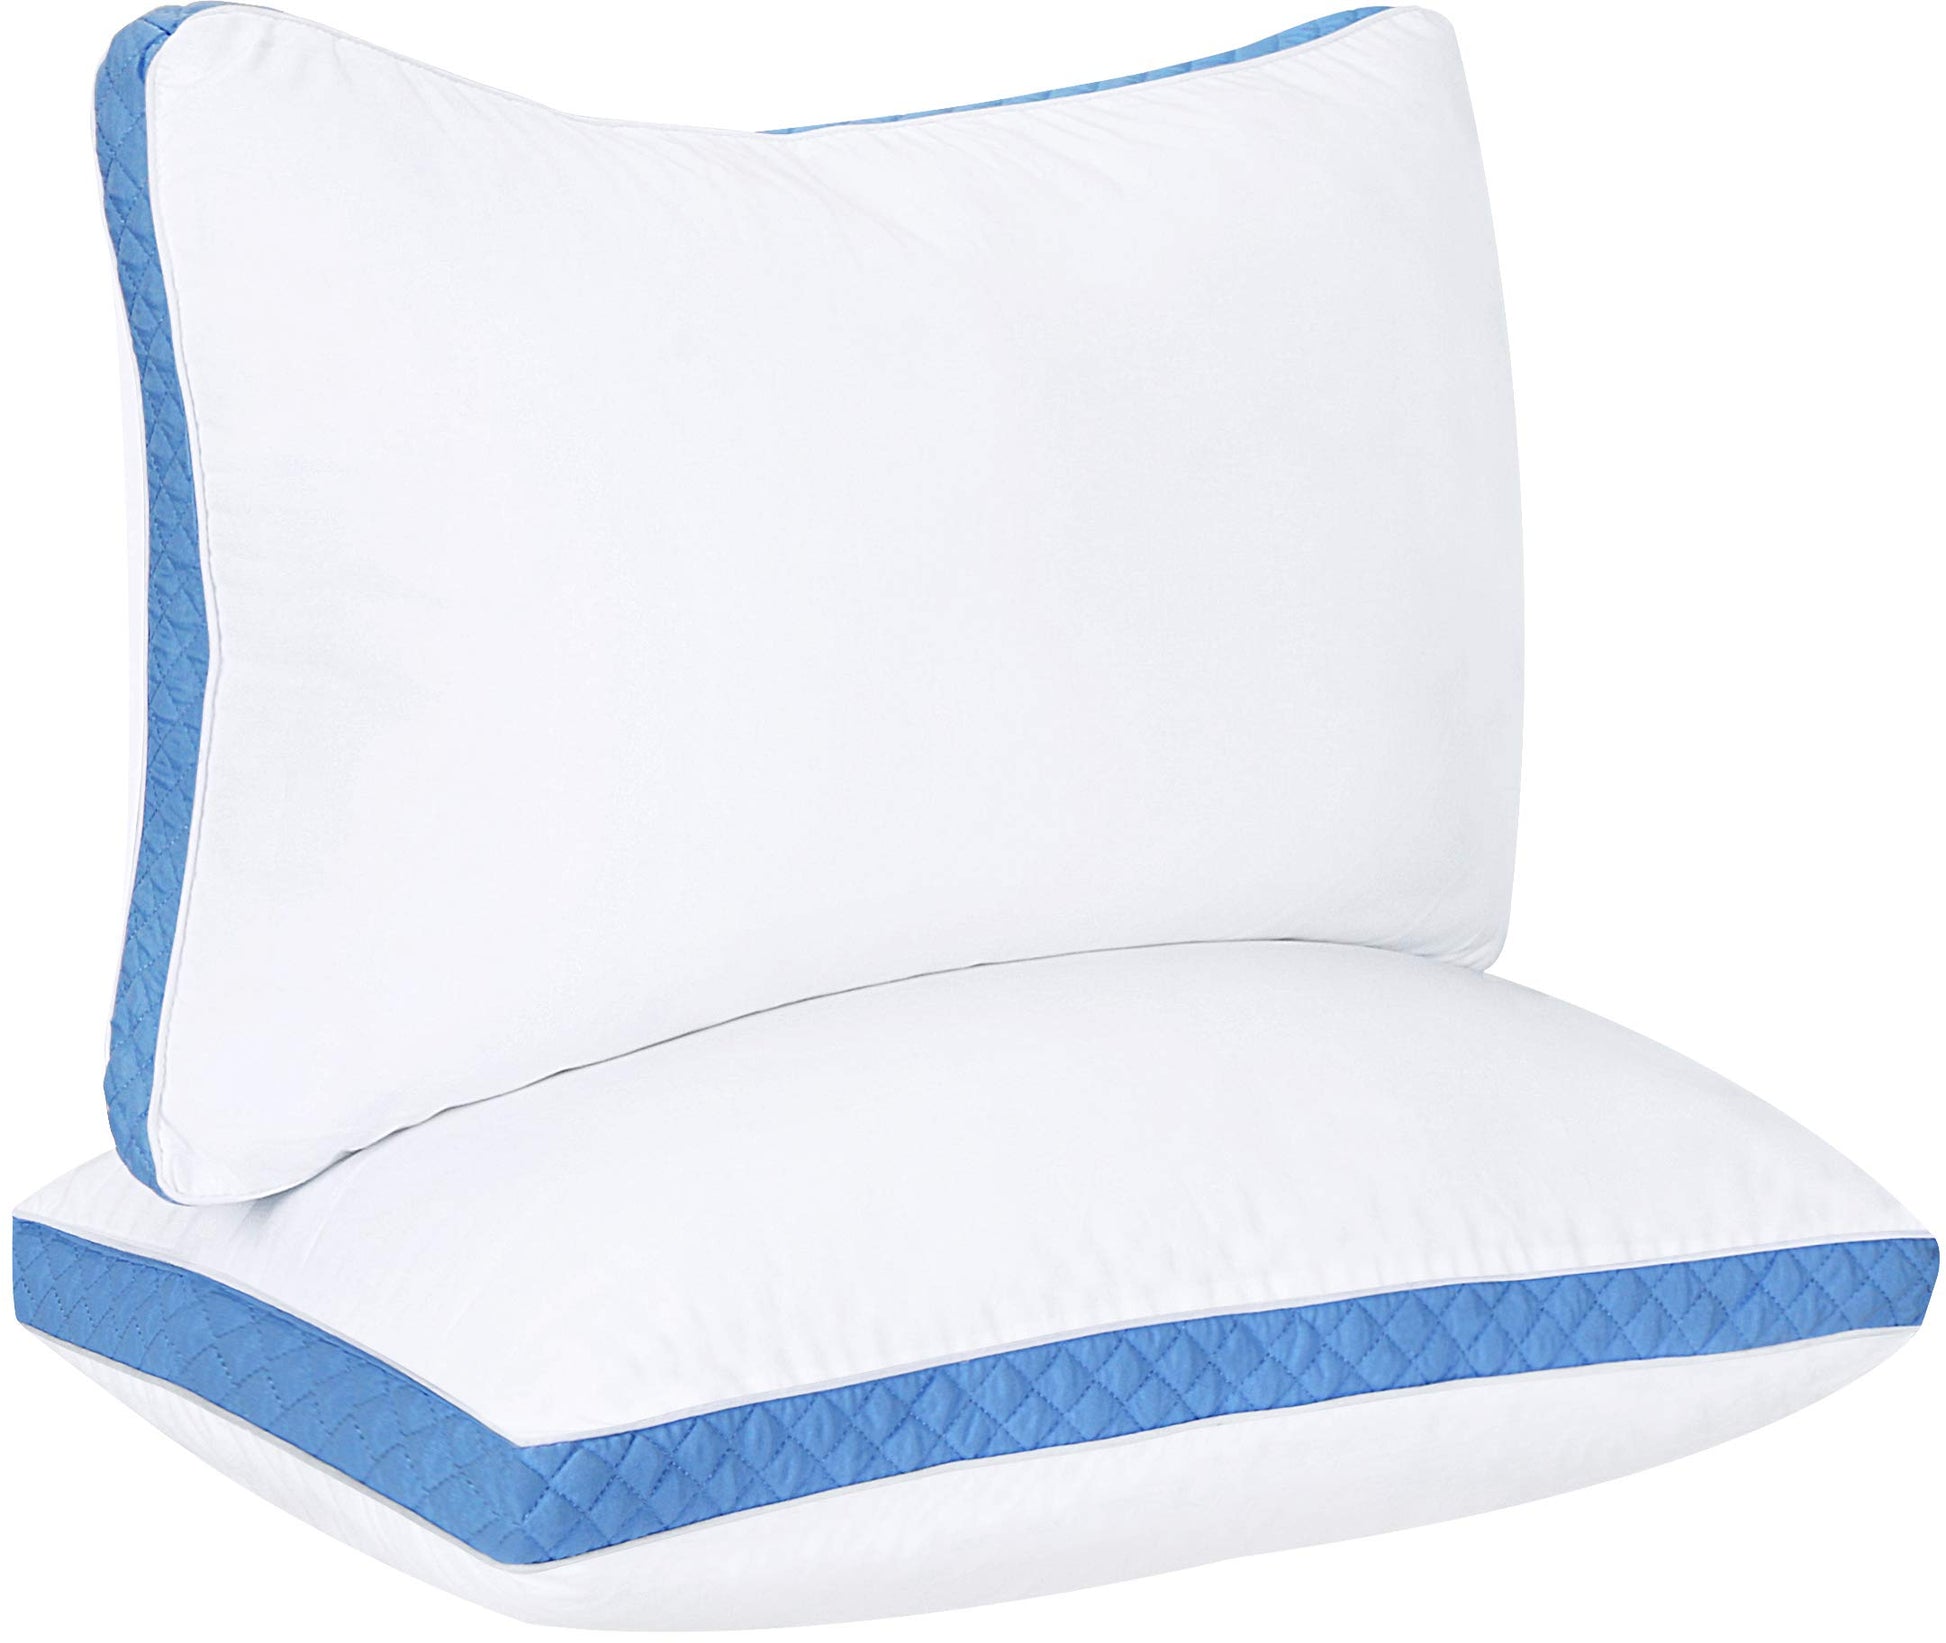 Fern and Willow Premium Loft Down Alternative Pillows for Sleeping 2-Pack - Gel